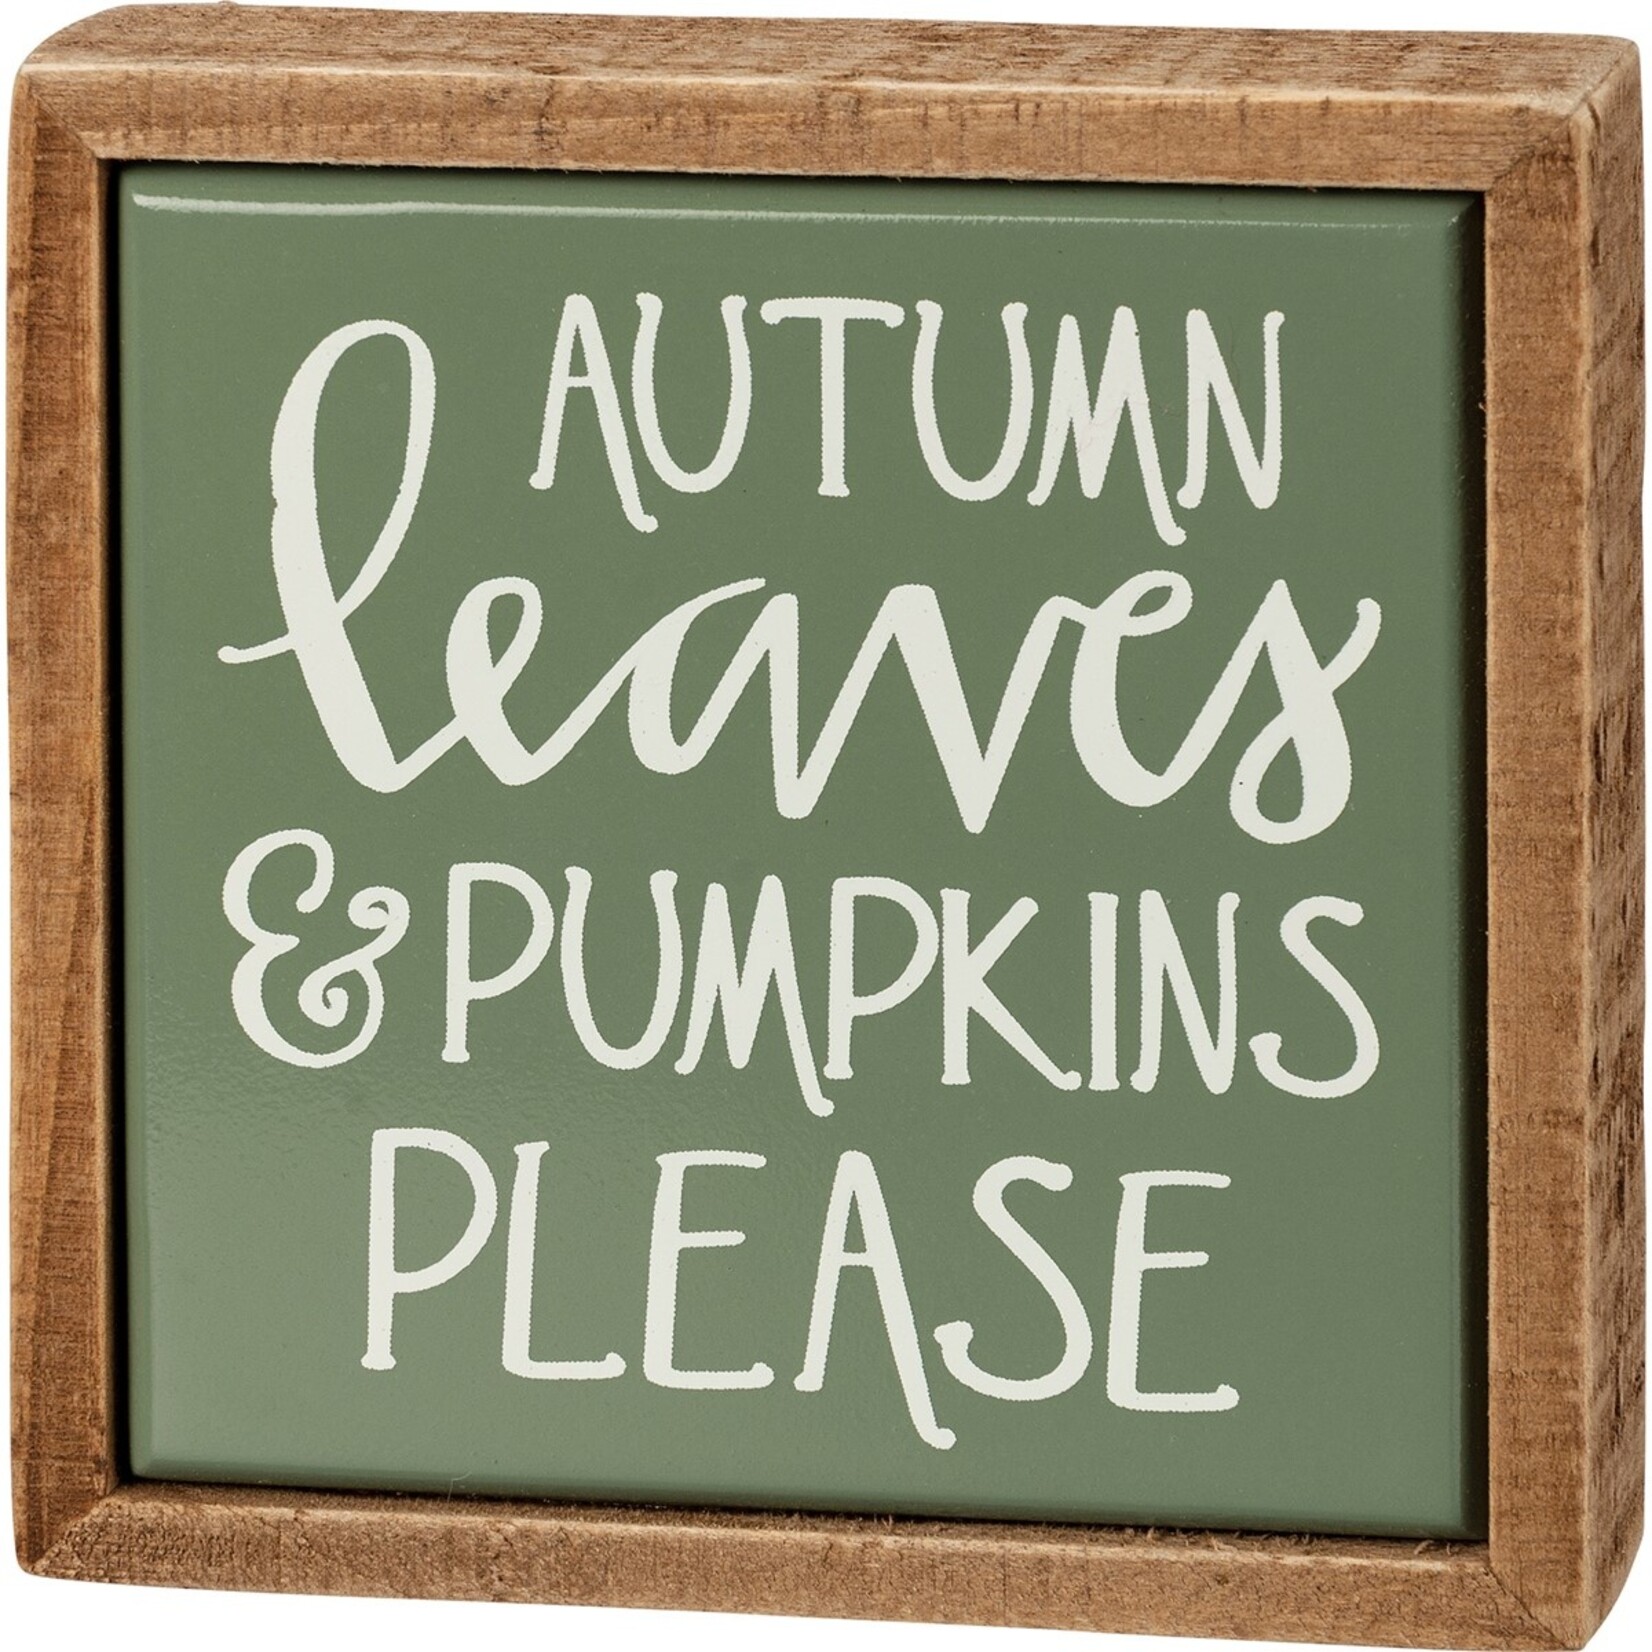 Primitives by Kathy Primitives by Kathy-Autumn Leaves & Pumpkins Please Box Sign Mini